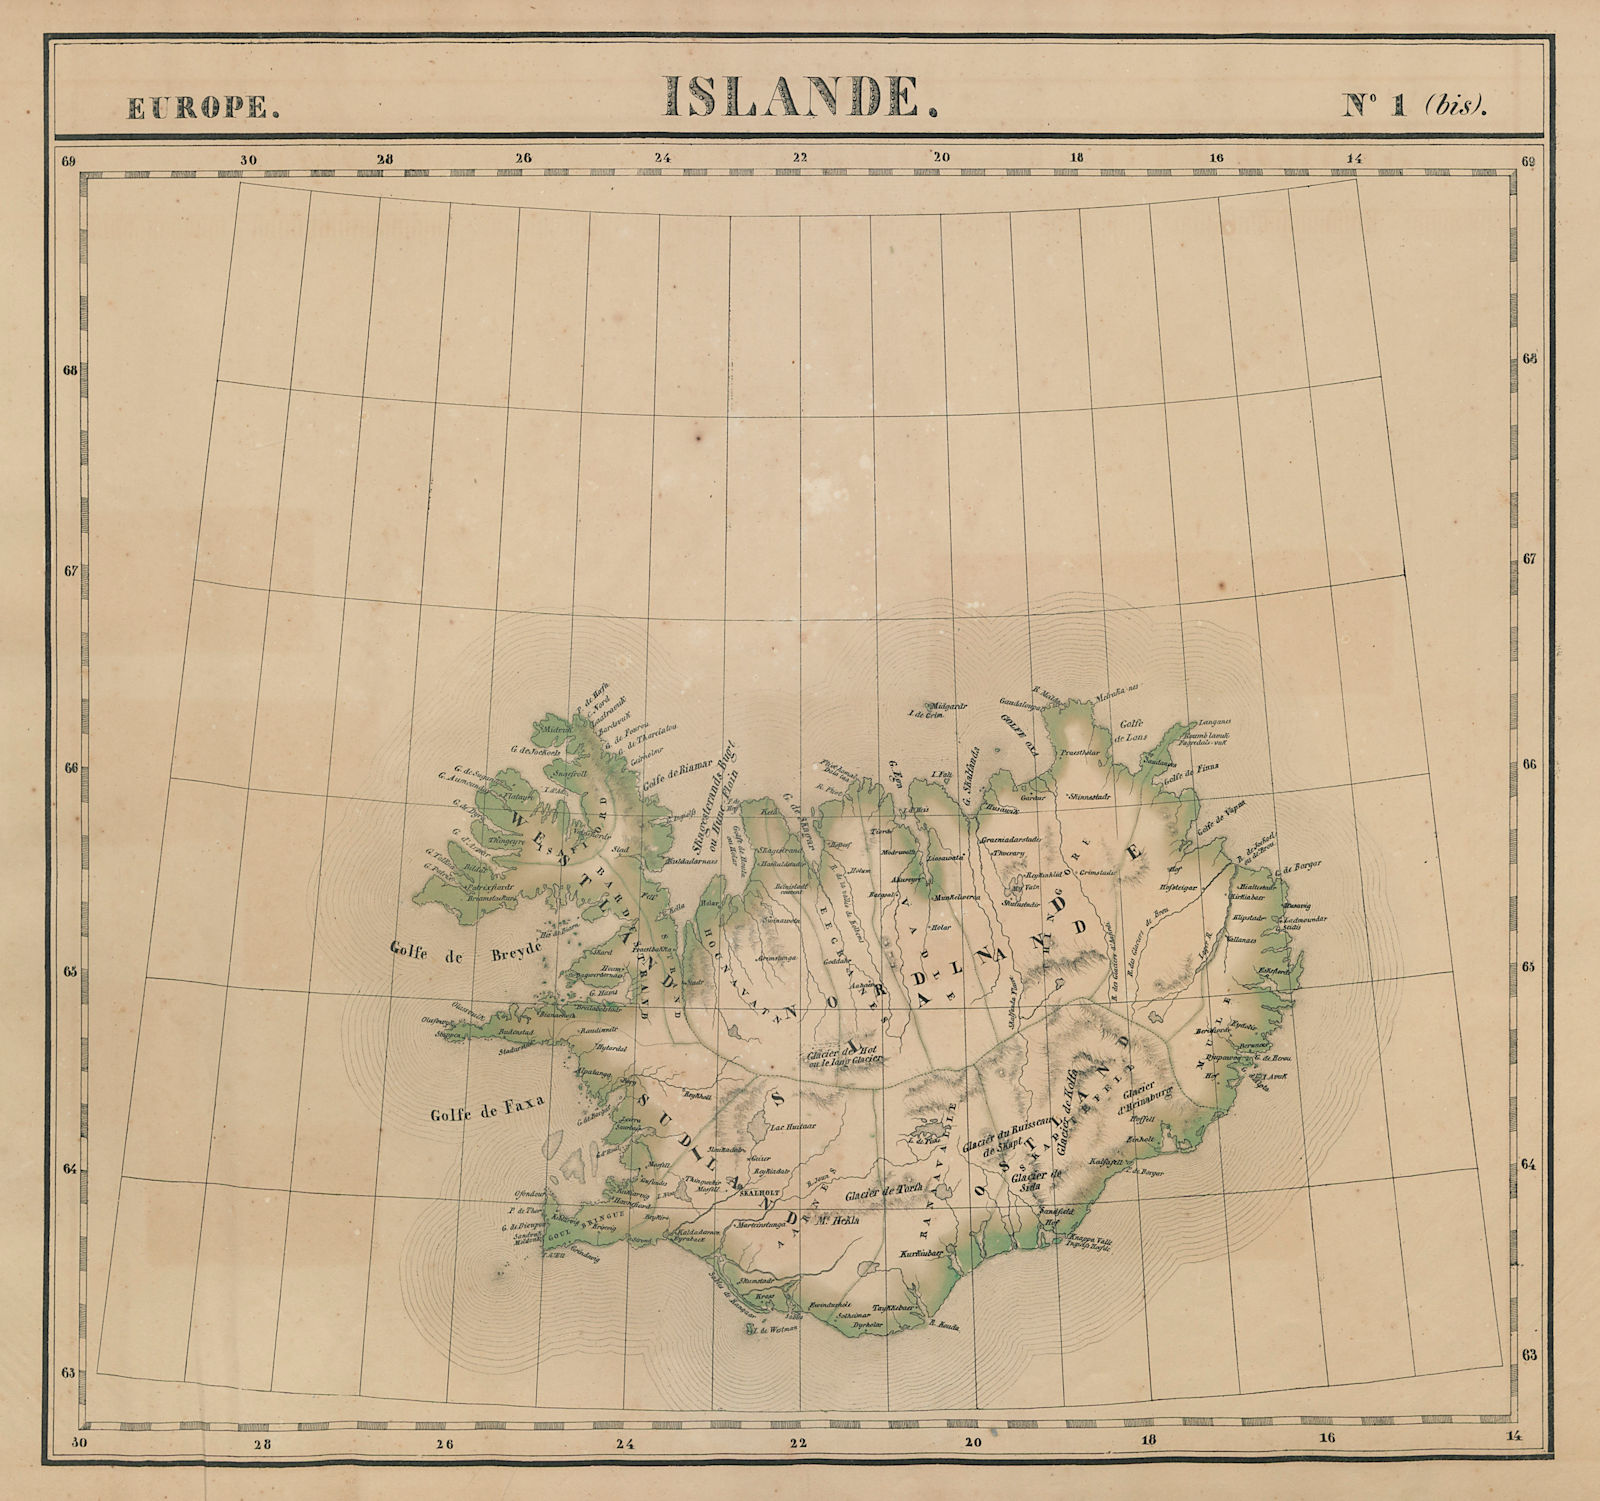 Europe. Islande #1 (bis) Iceland. VANDERMAELEN 1827 old antique map plan chart